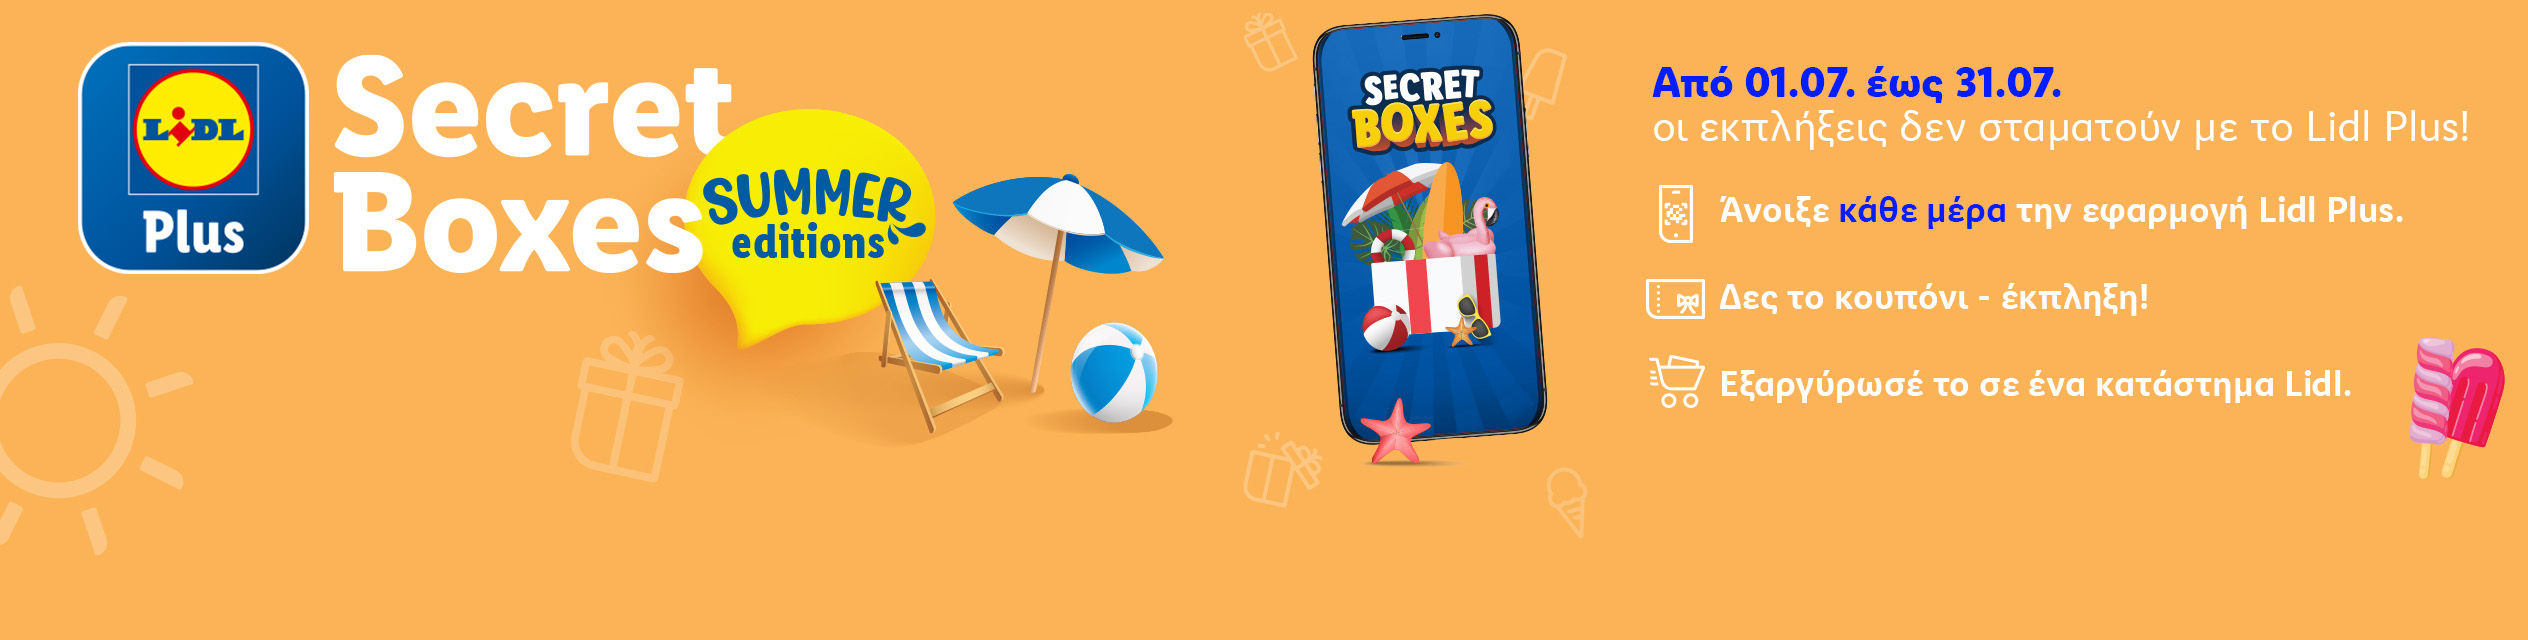 Secret Boxes Summer Editions